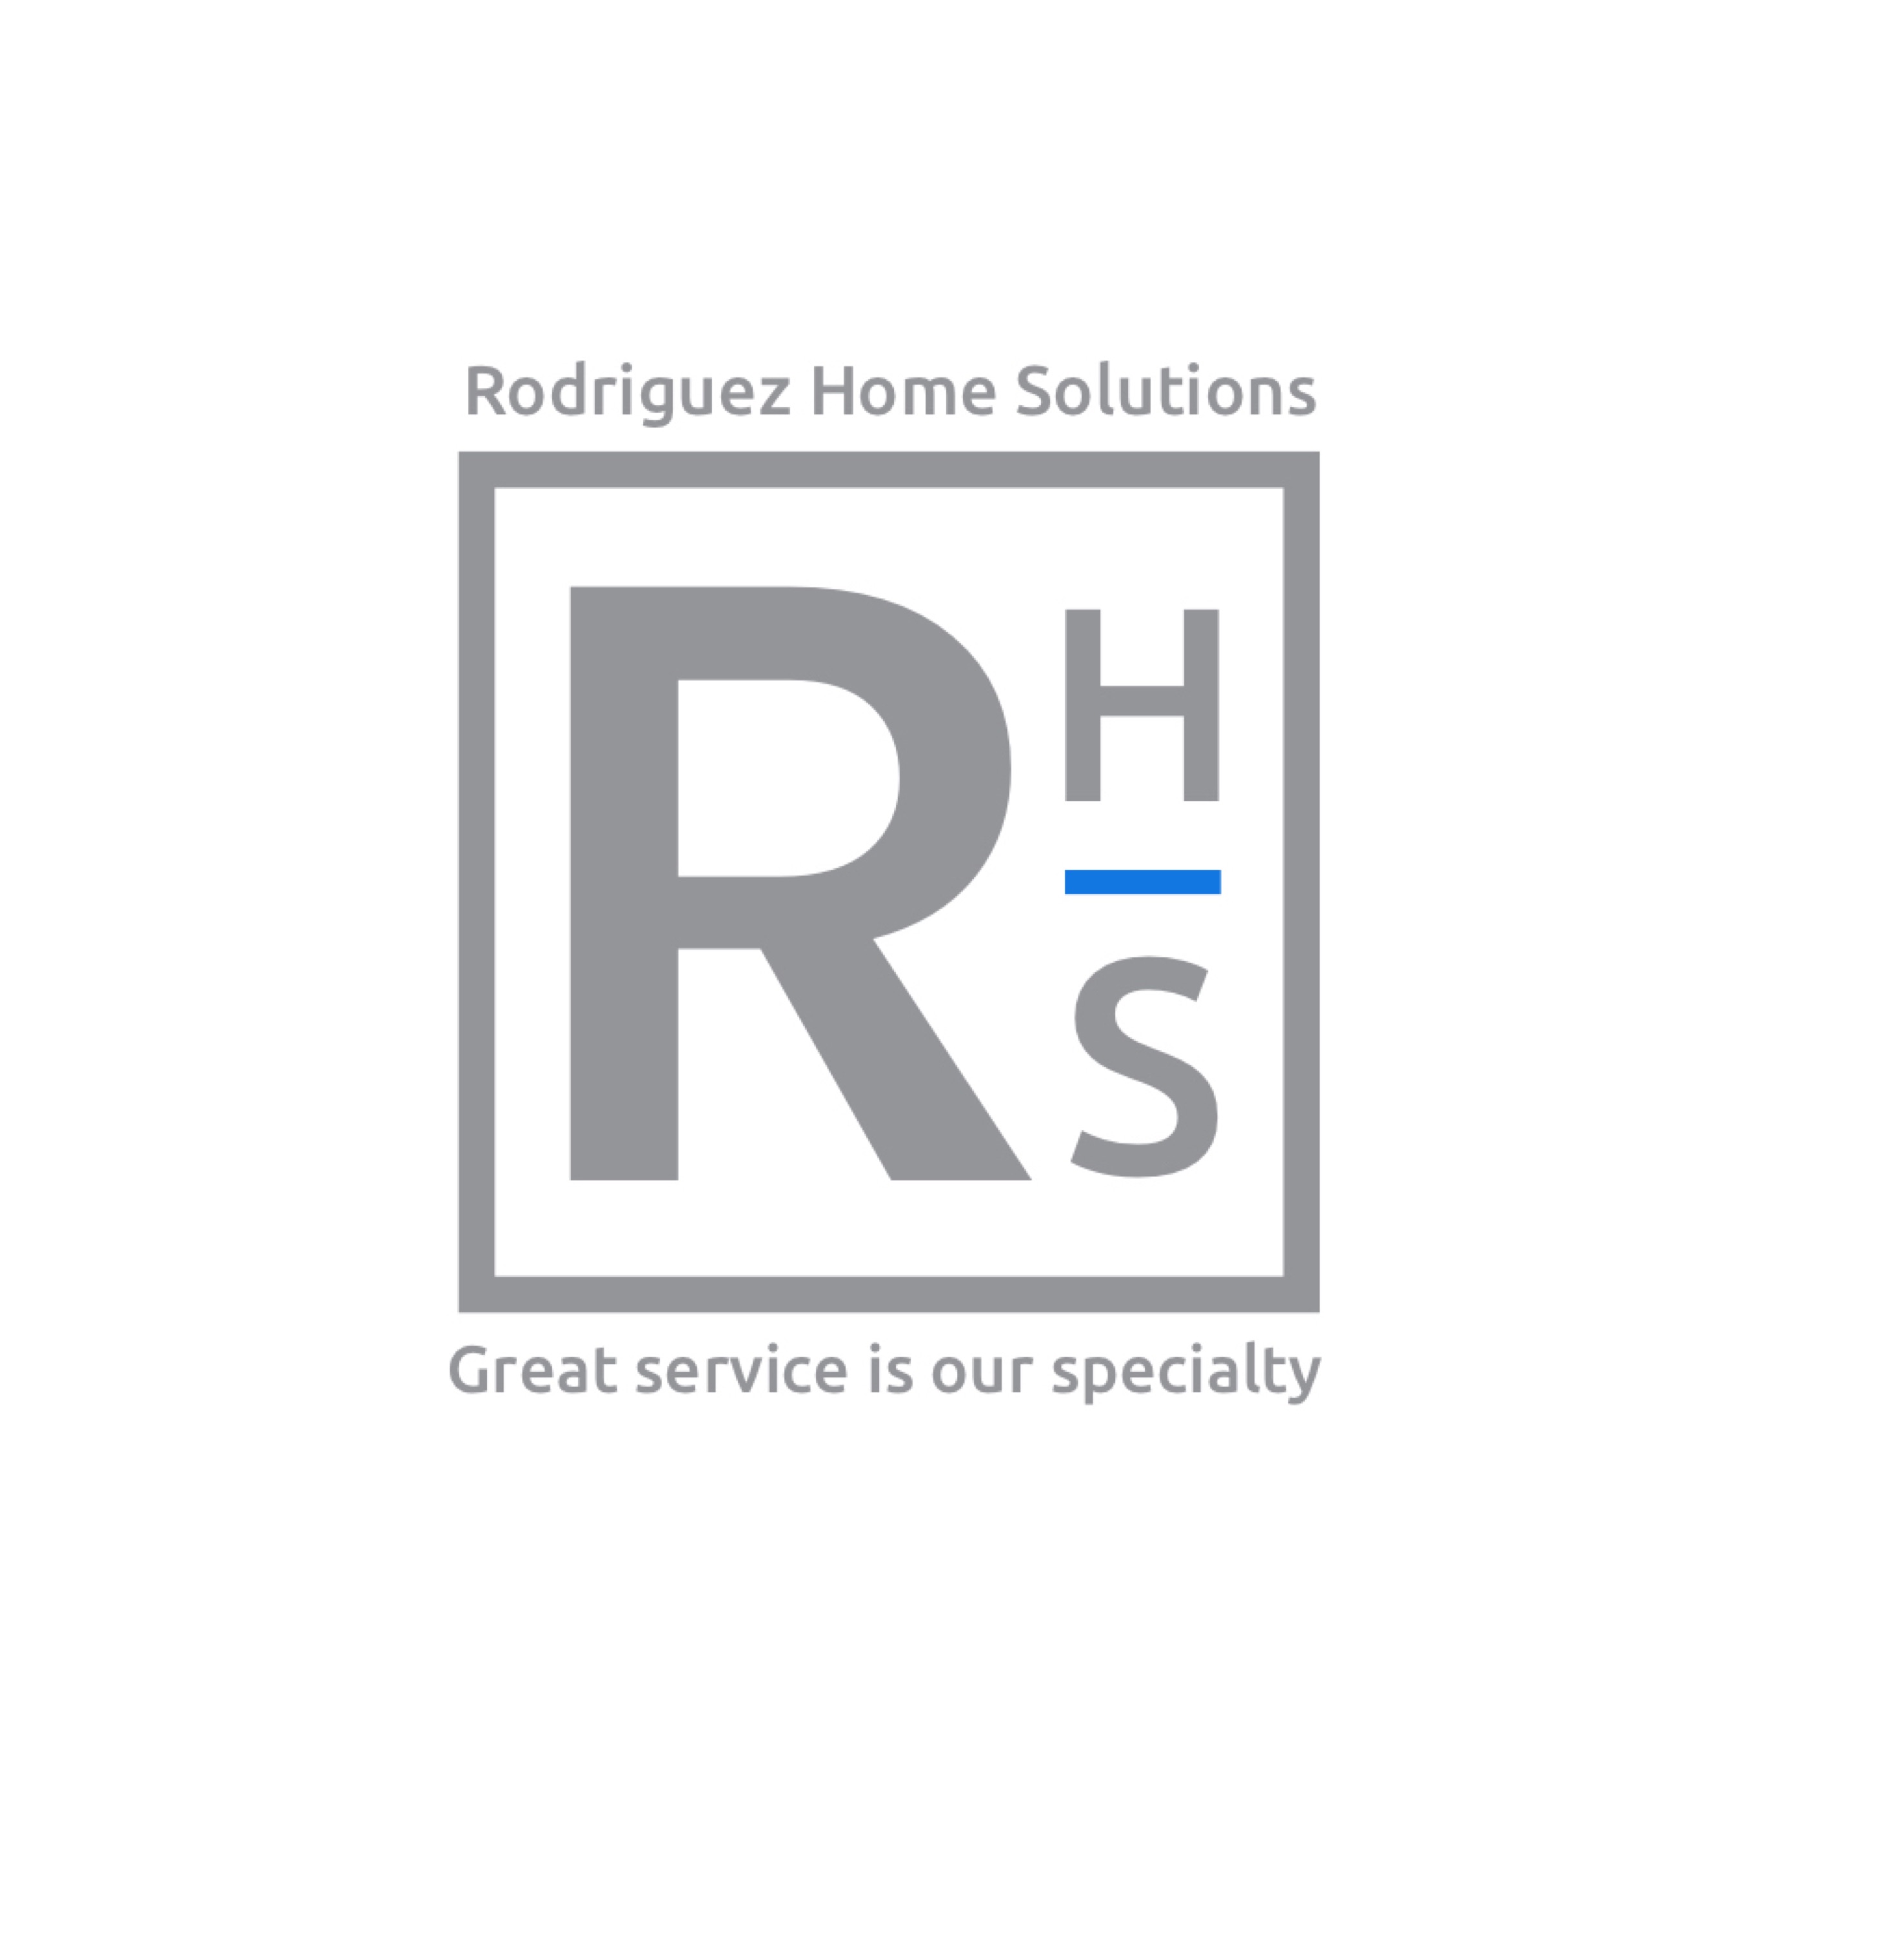 Rodriguez Home Solutions Logo